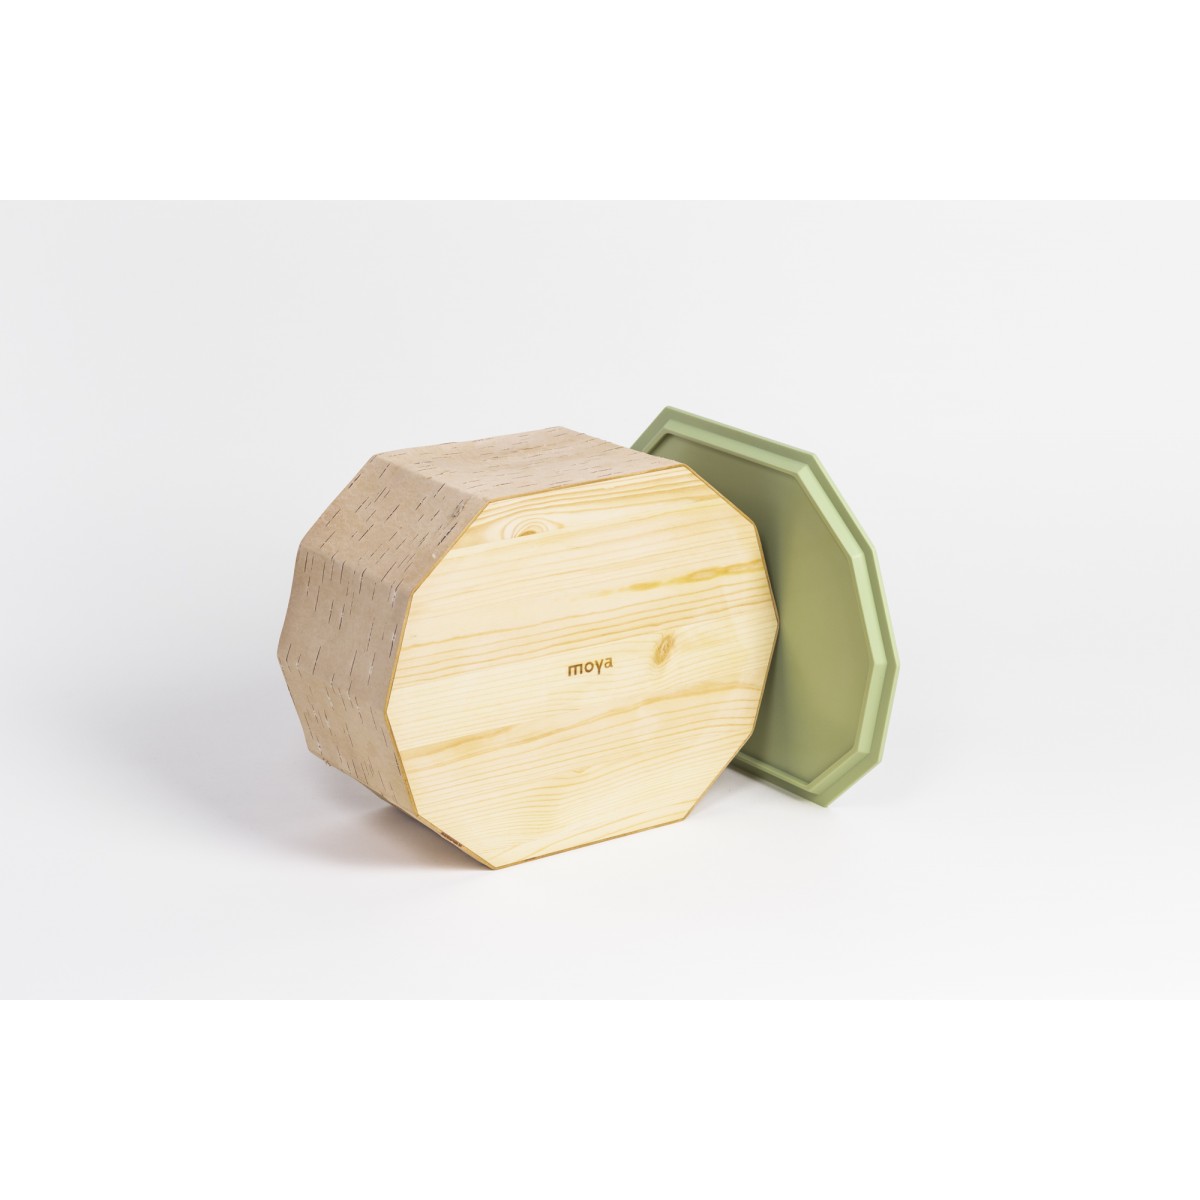 MOYA
Nachhaltige Brotbox aus Birkenrinde
TUESA | Breadbox #2